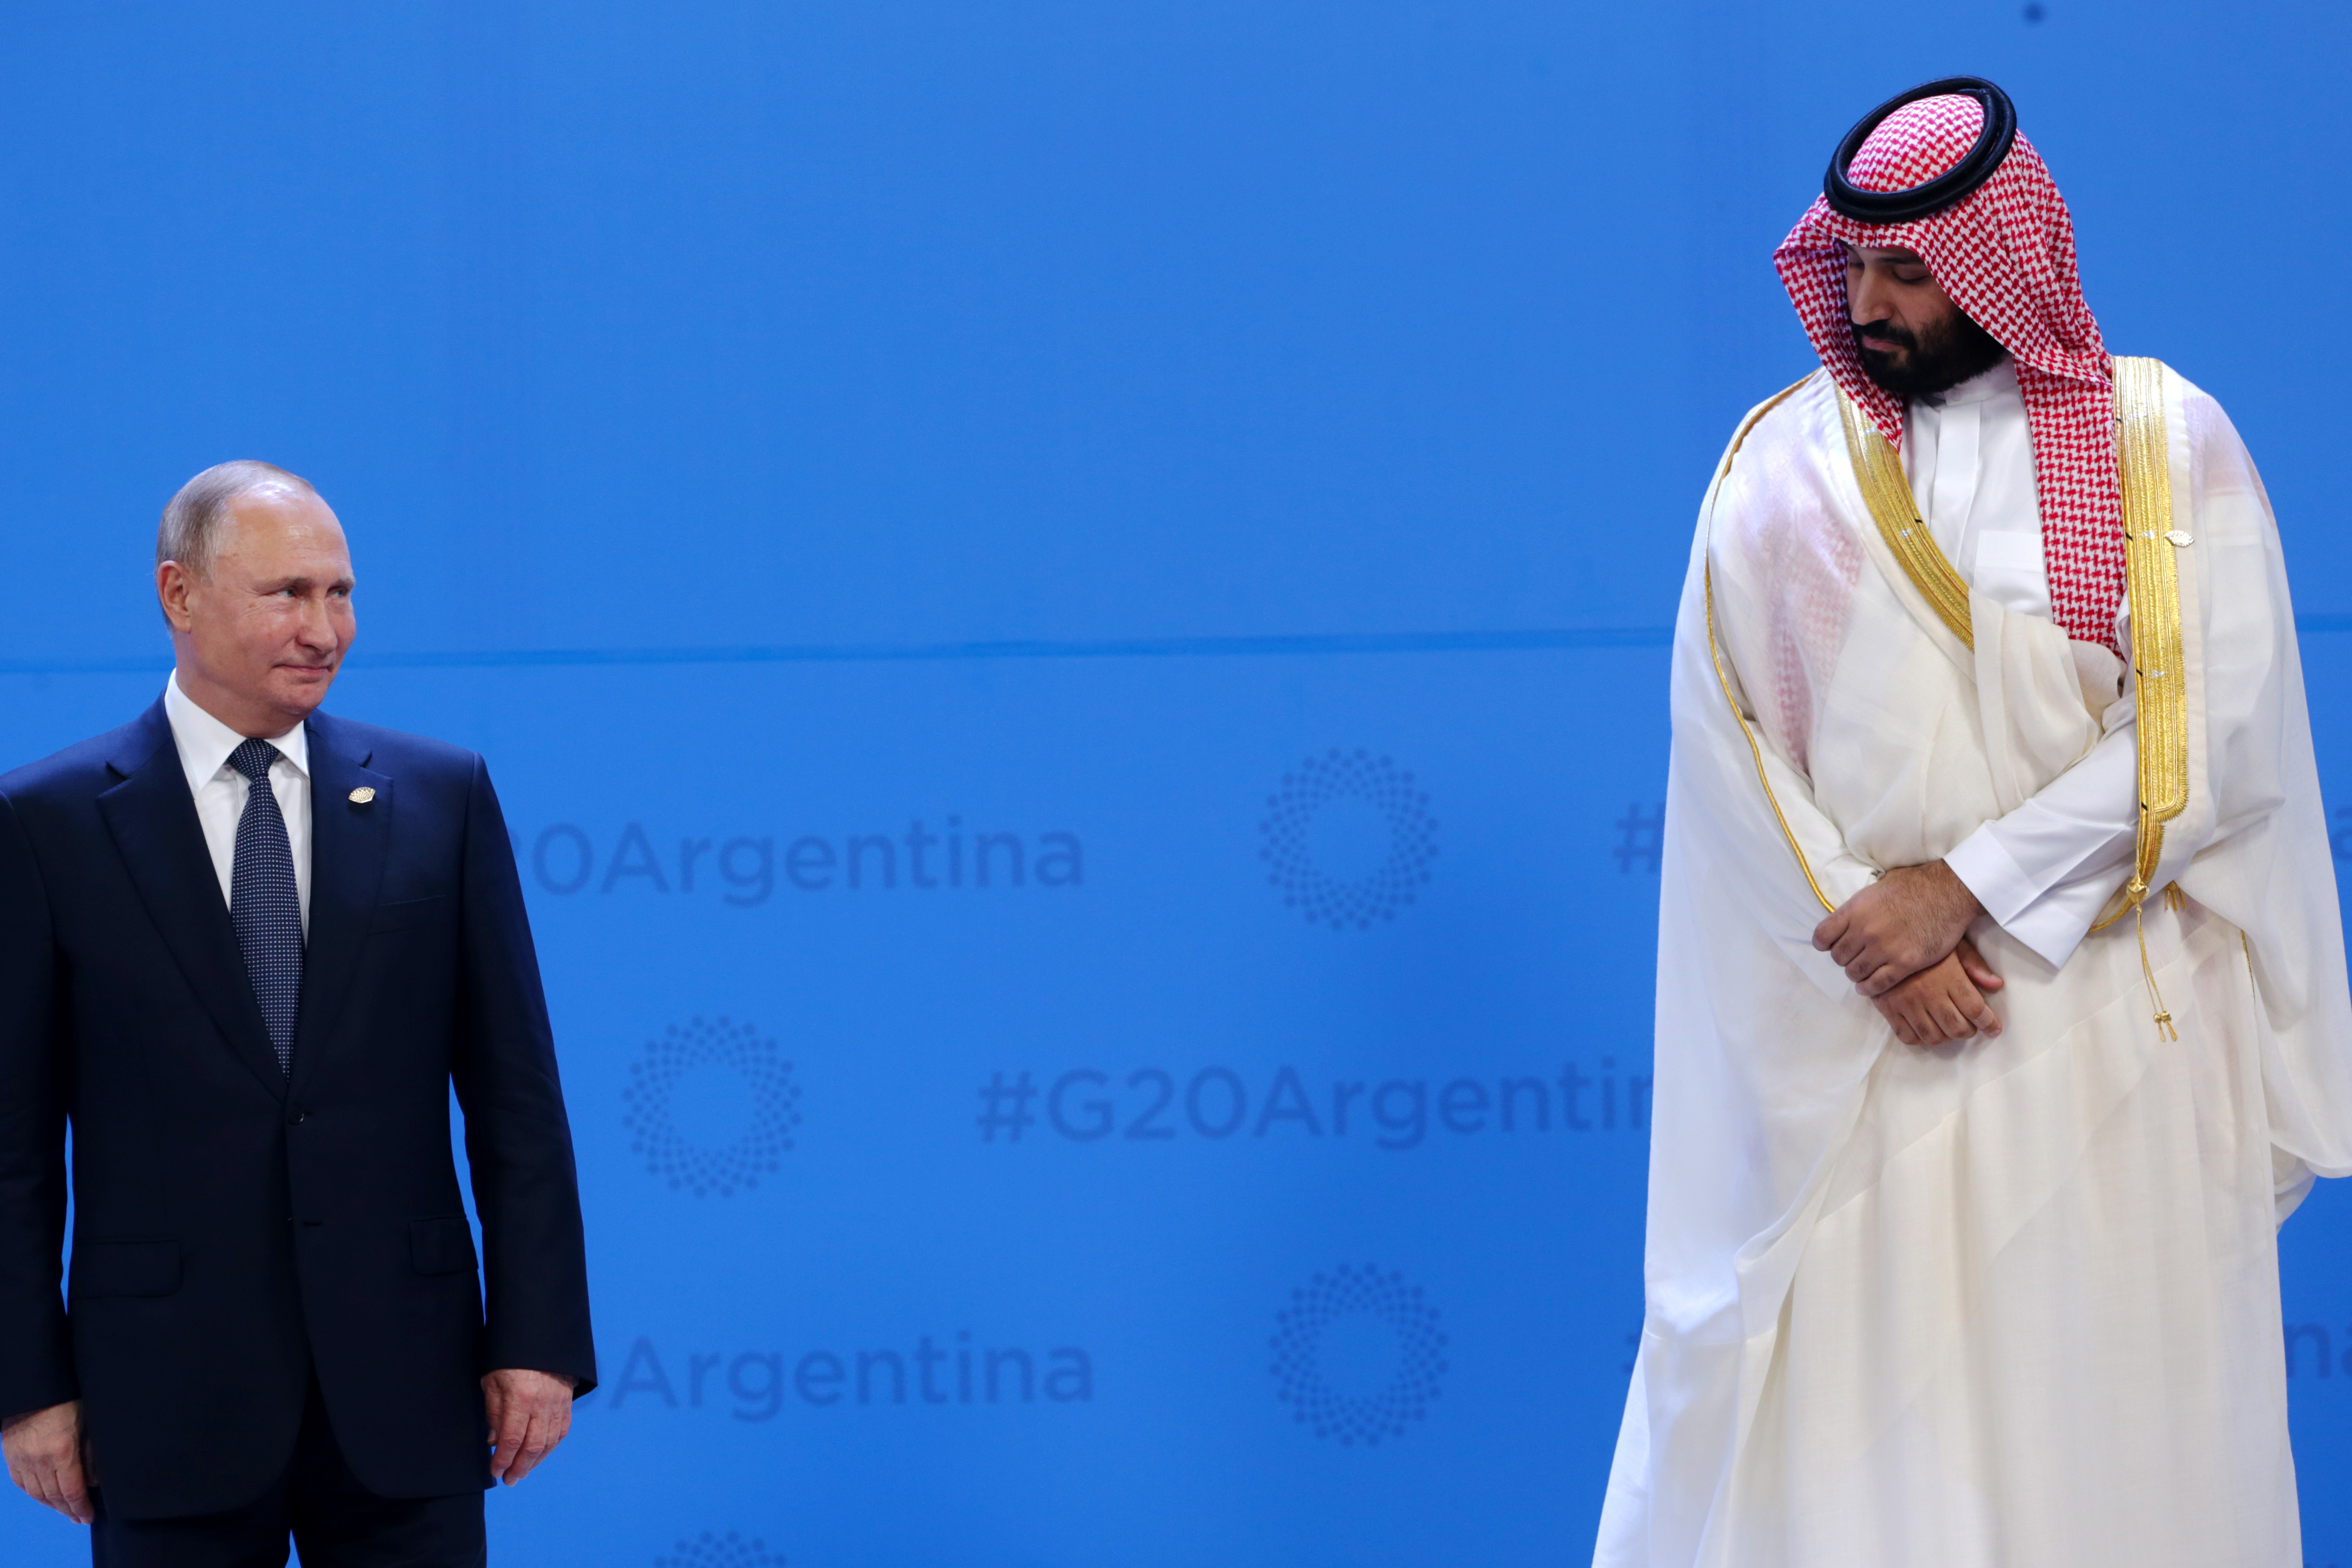 Russian President Vladimir Putin looks over at Crown Prince of Saudi Arabia Mohammad bin Salman al-Saud on Nov. 30, 2018 in Buenos Aires, Argentina. (Daniel Jayo/Getty Images)